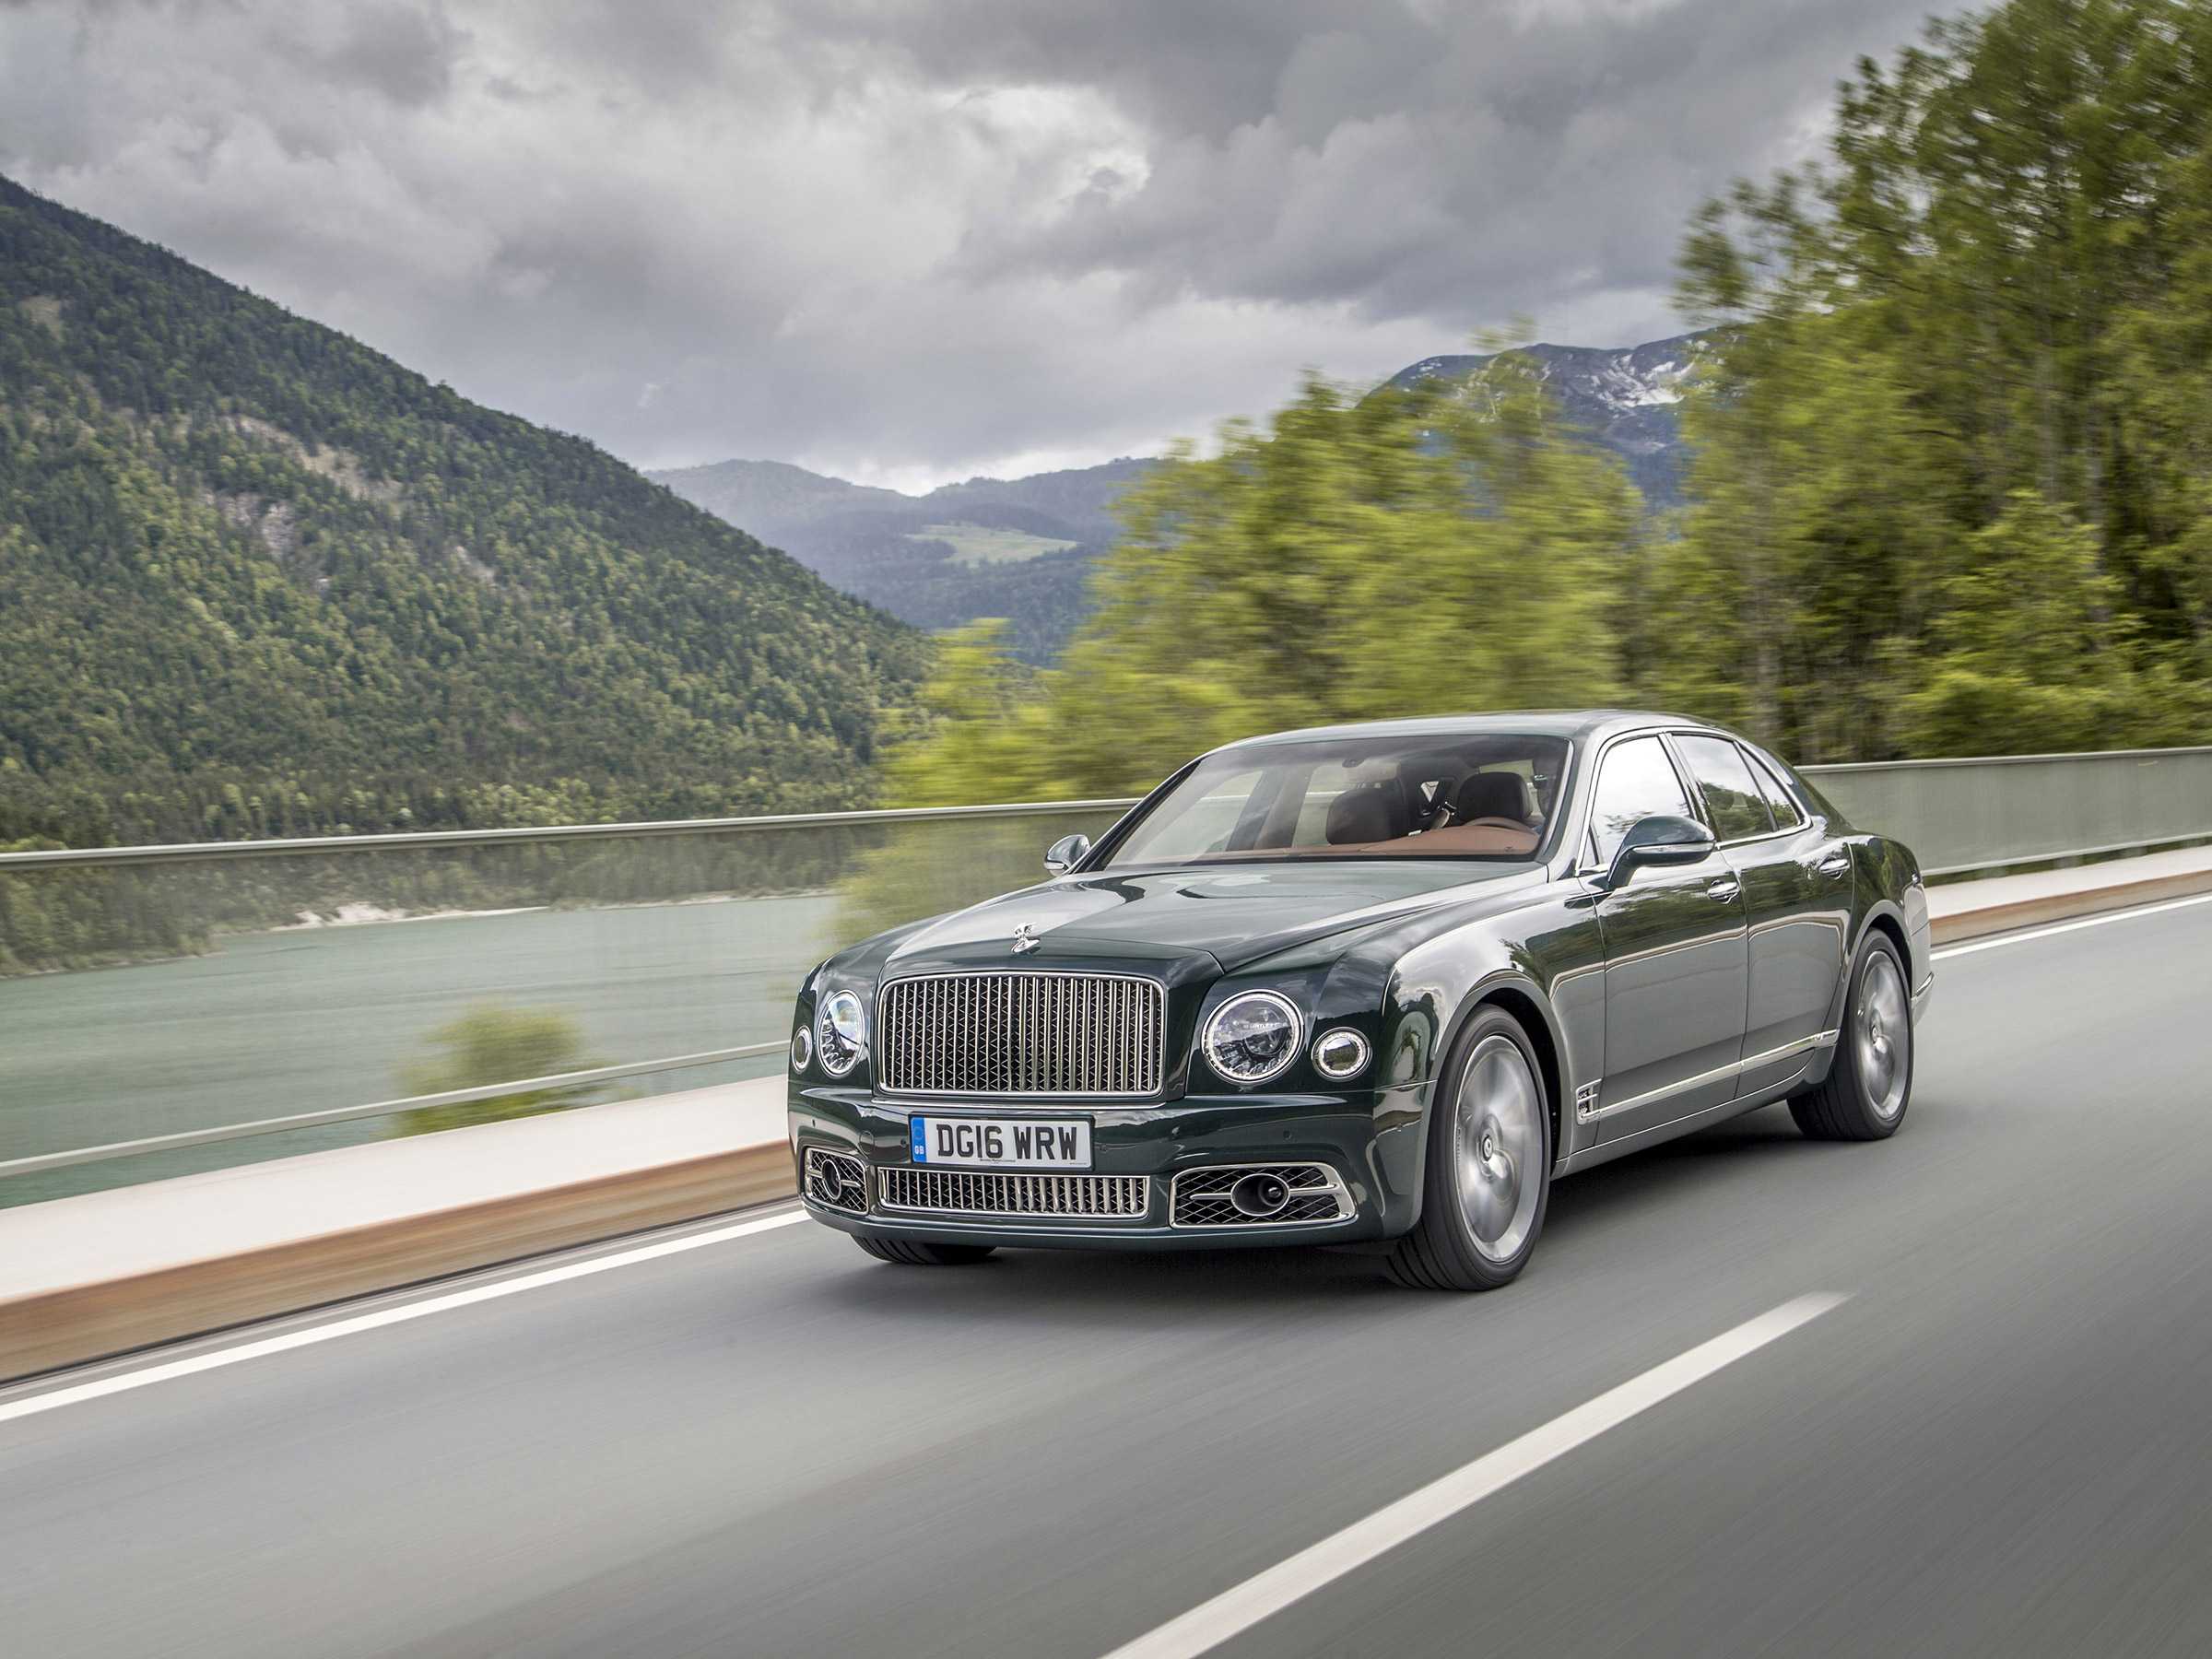 Bentley mulsanne (бентли мулсанне) 2021 - обзор модели c фото и видео